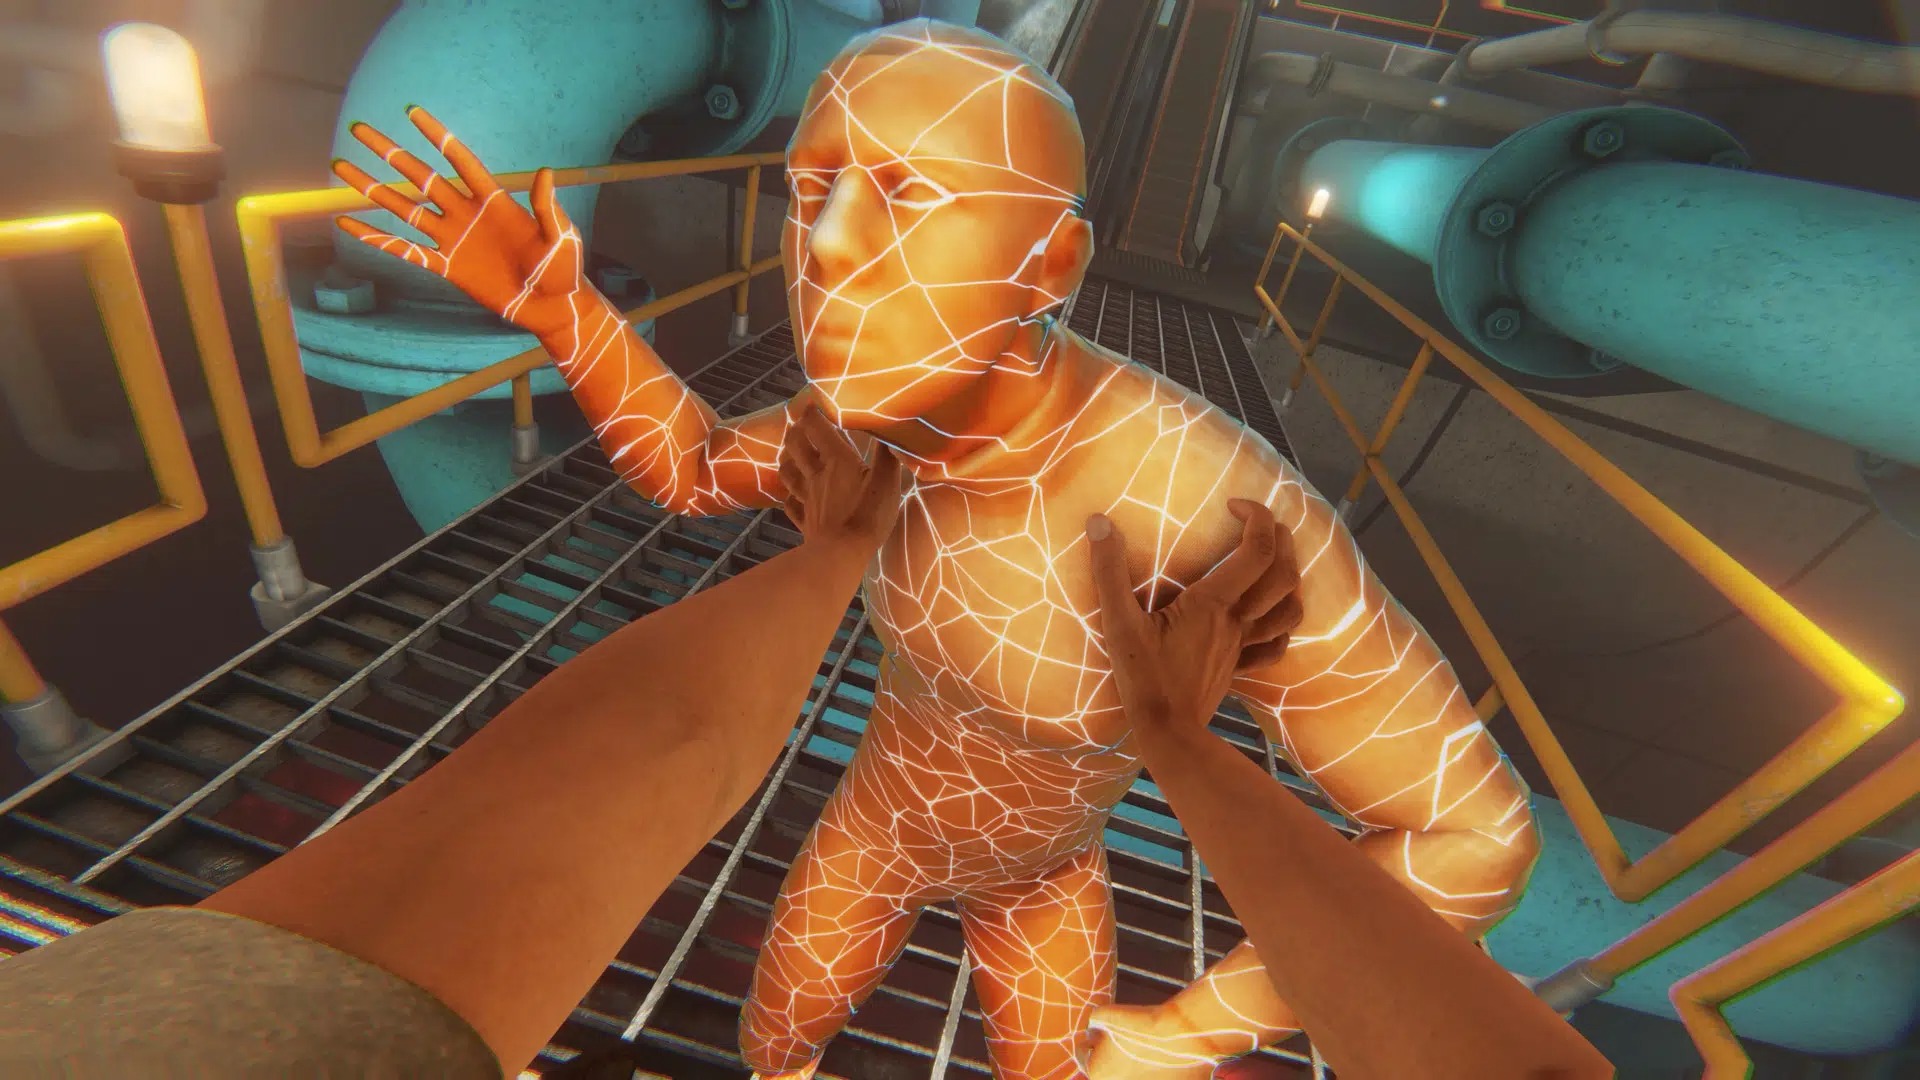 VR新作《Bonelab》本周即将发售 游戏预告片赏